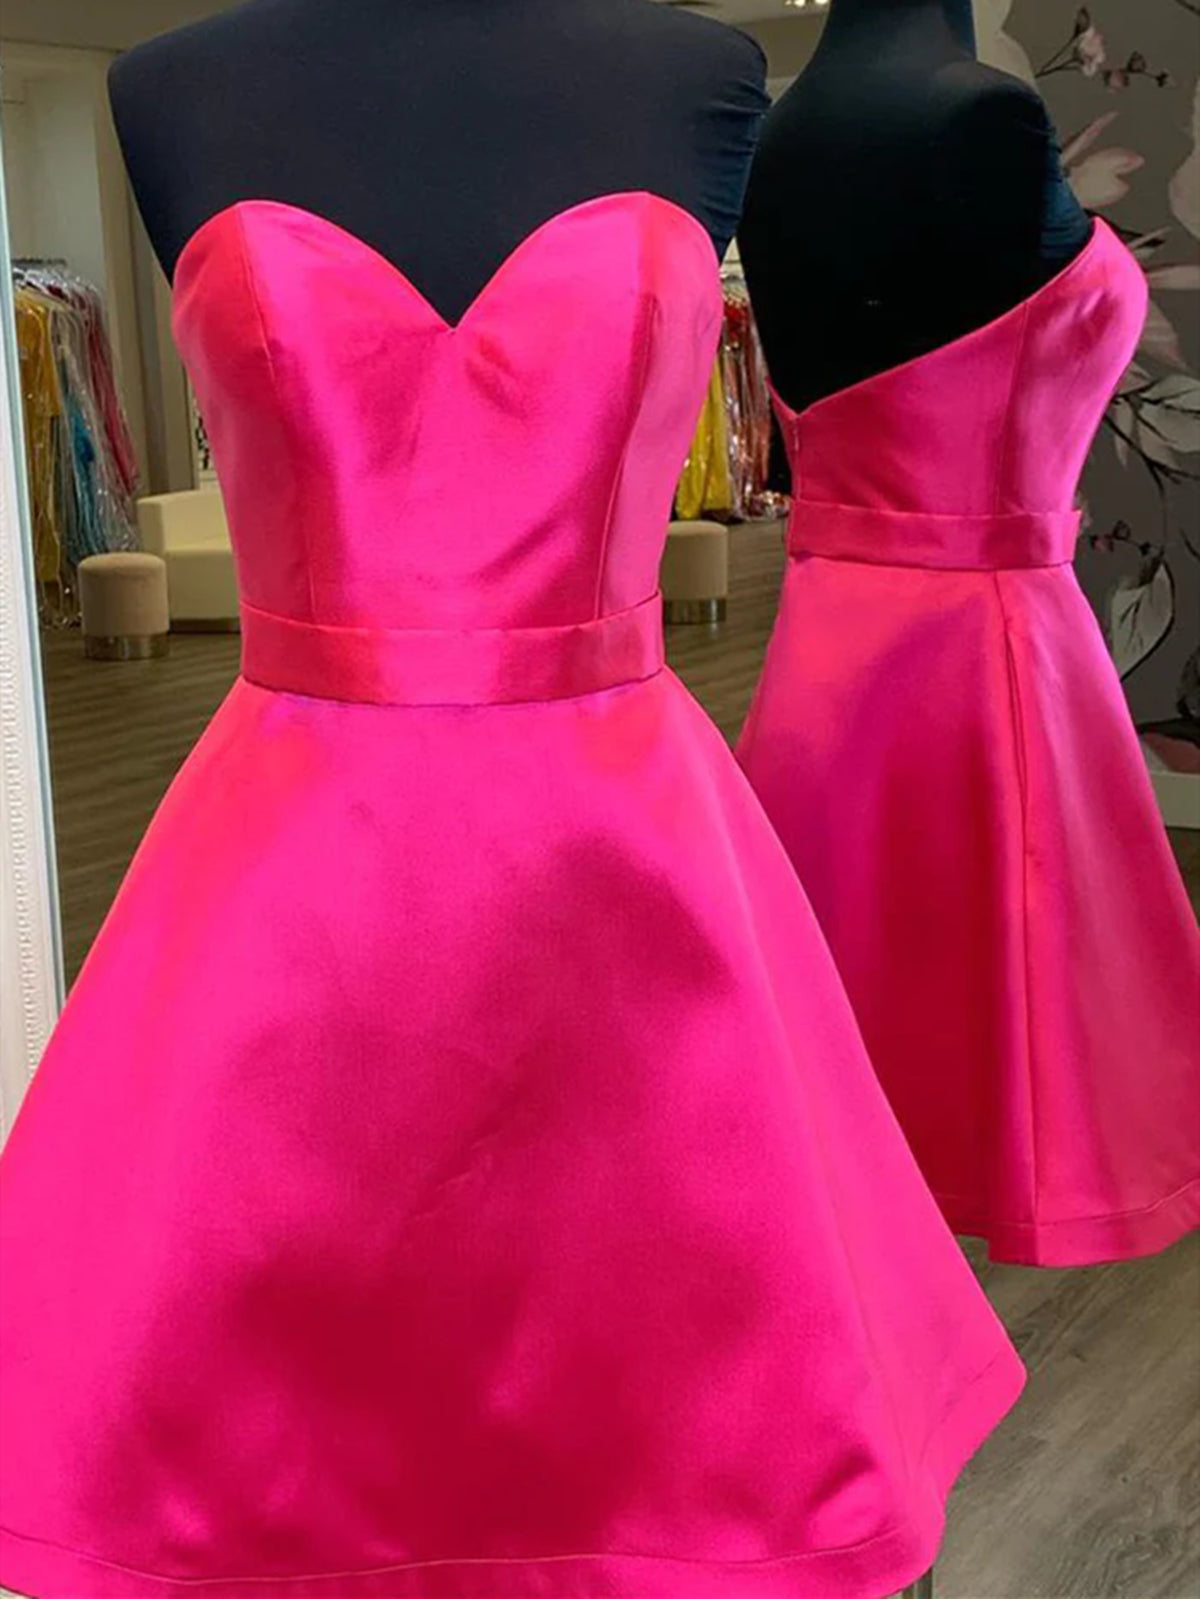 Black Wedding Dress, Sweetheart Neck Short Pink Prom Dresses, Short Pink Formal Homecoming Dresses